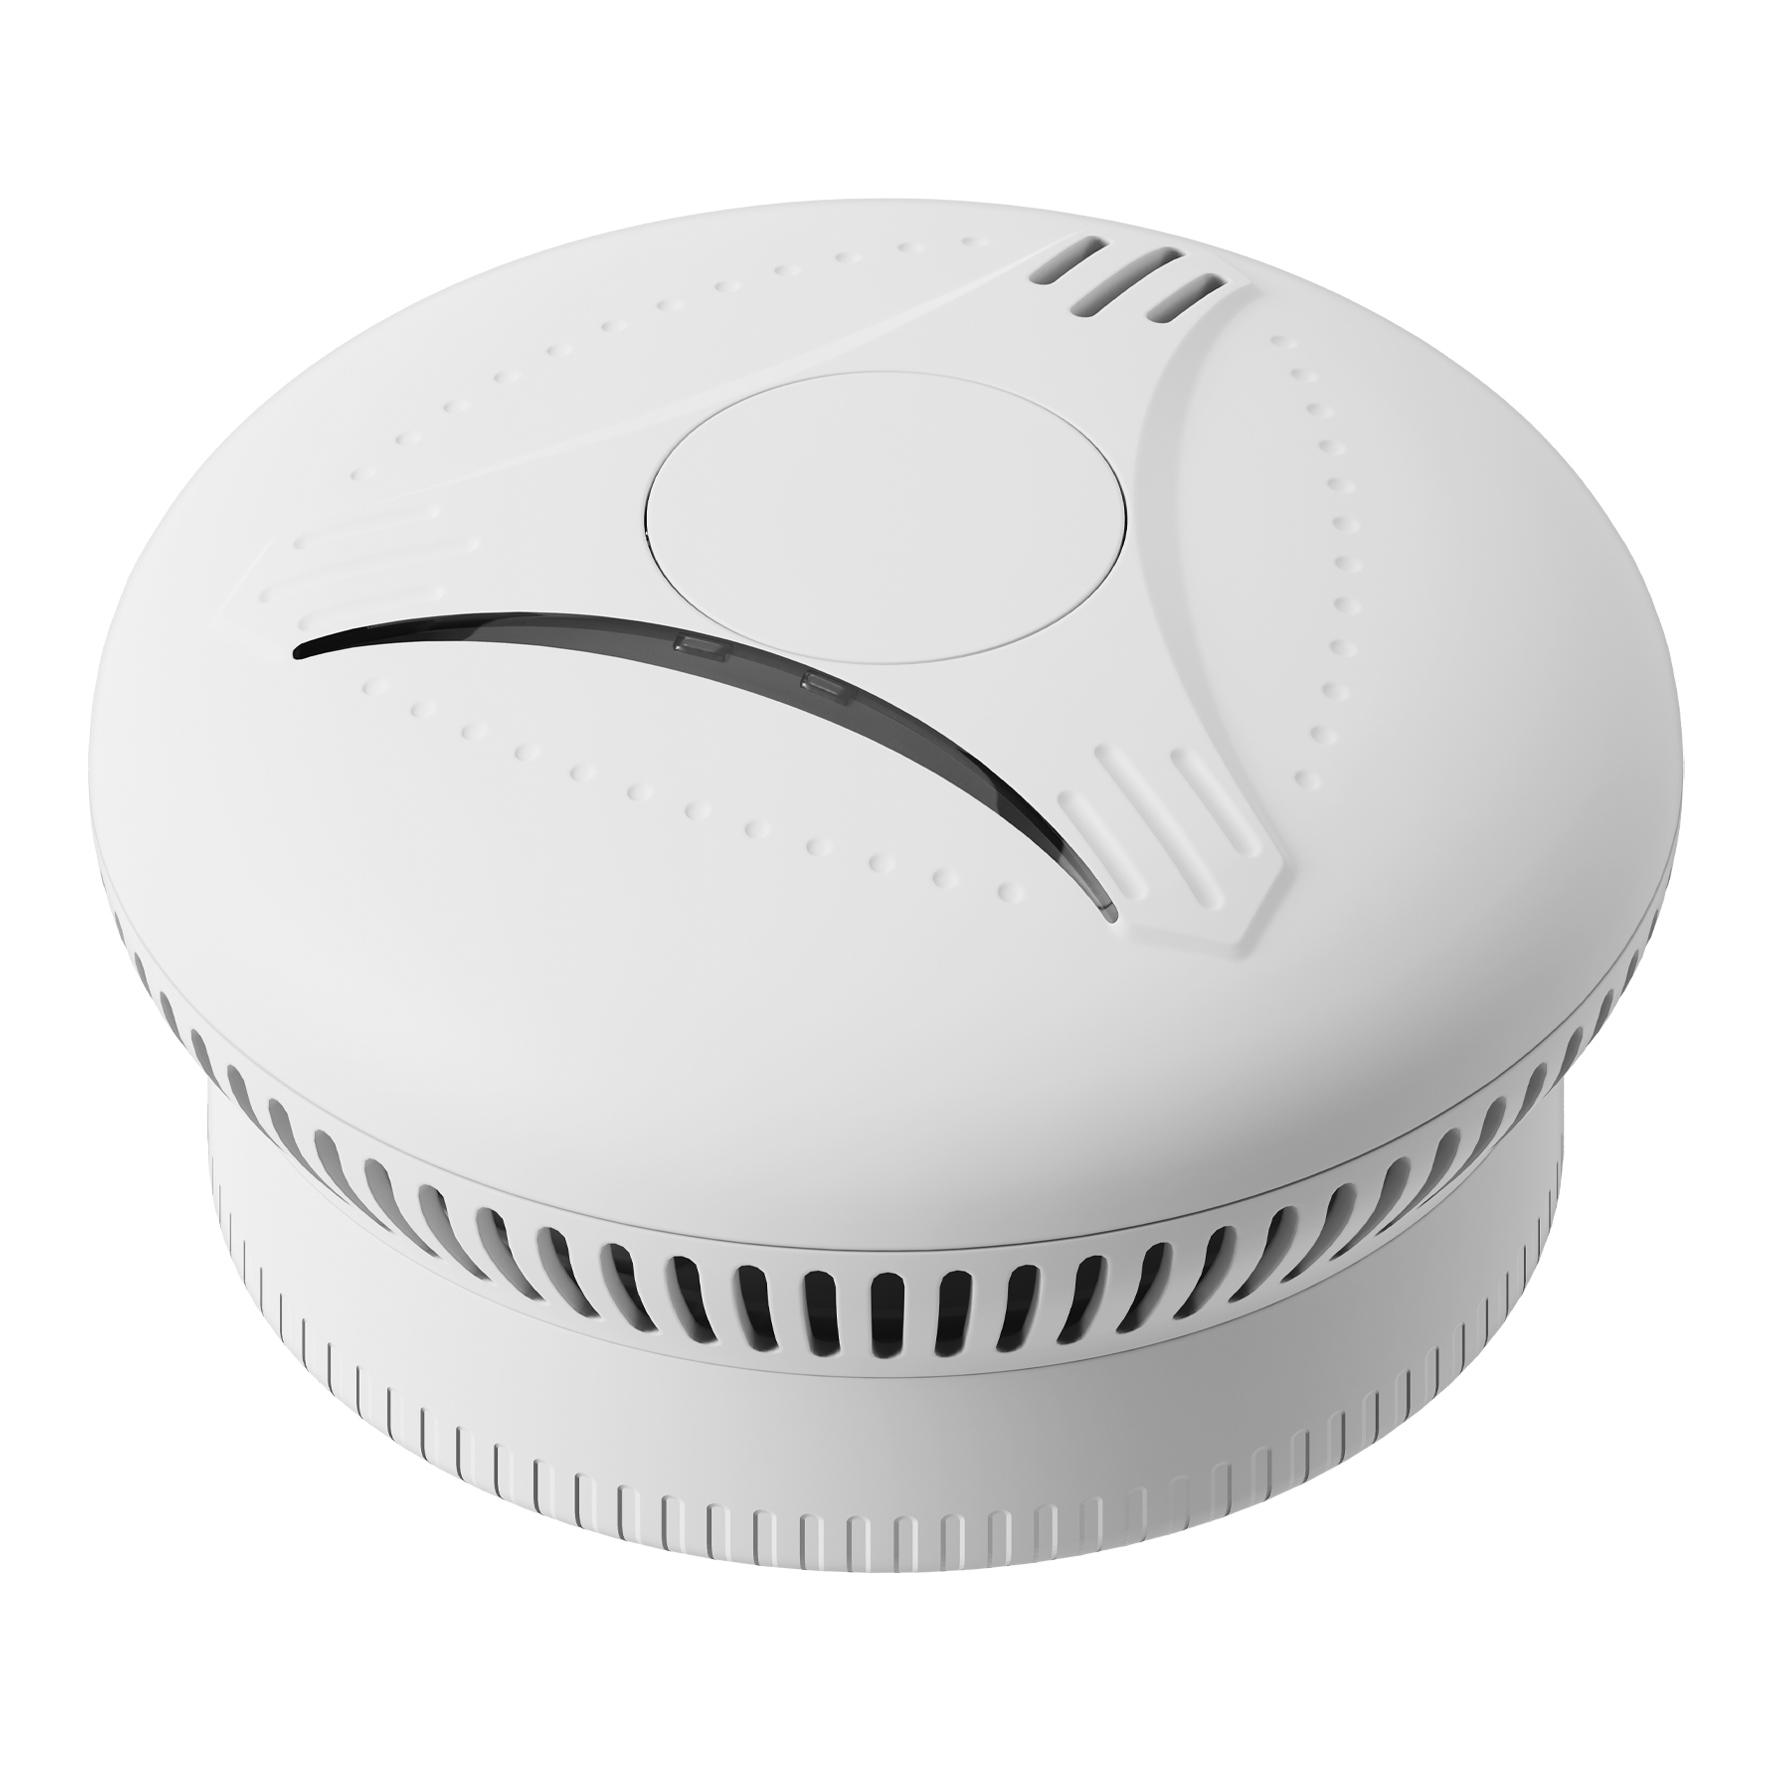 Smart WIFI Smoke Detector